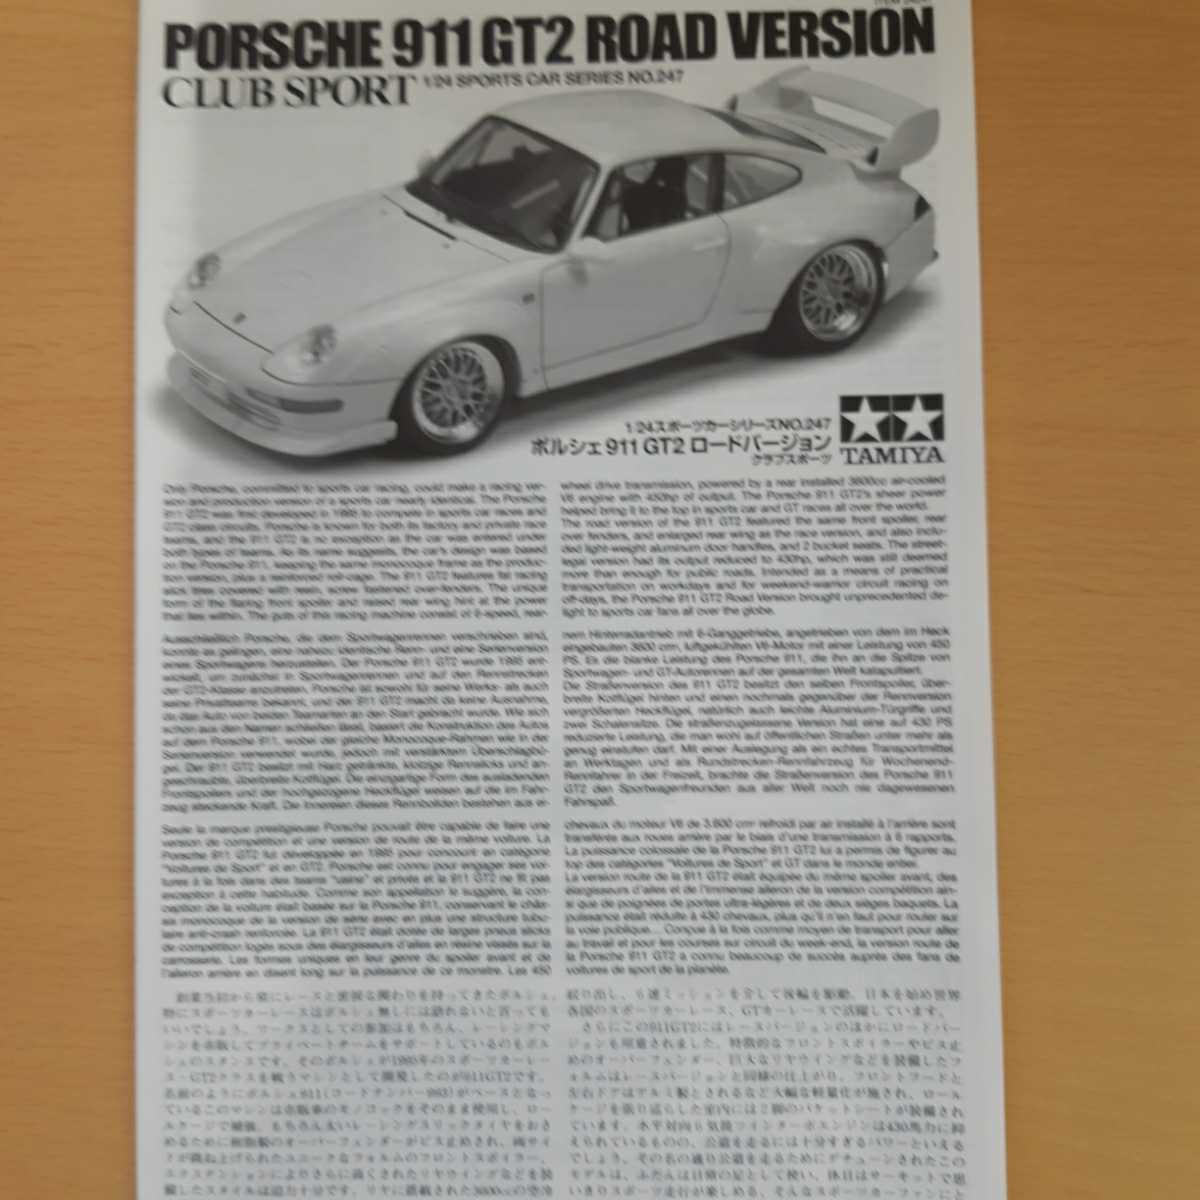 TAMIYA ポルシェ 911 GT2 ロードバージョン クラブスポーツ 1/24スポーツカーシリーズNo.247 ディスプレイモデル(ポルシェ)｜売買されたオークション情報、yahooの商品情報をアーカイブ公開  - オークファン（aucfan.com）